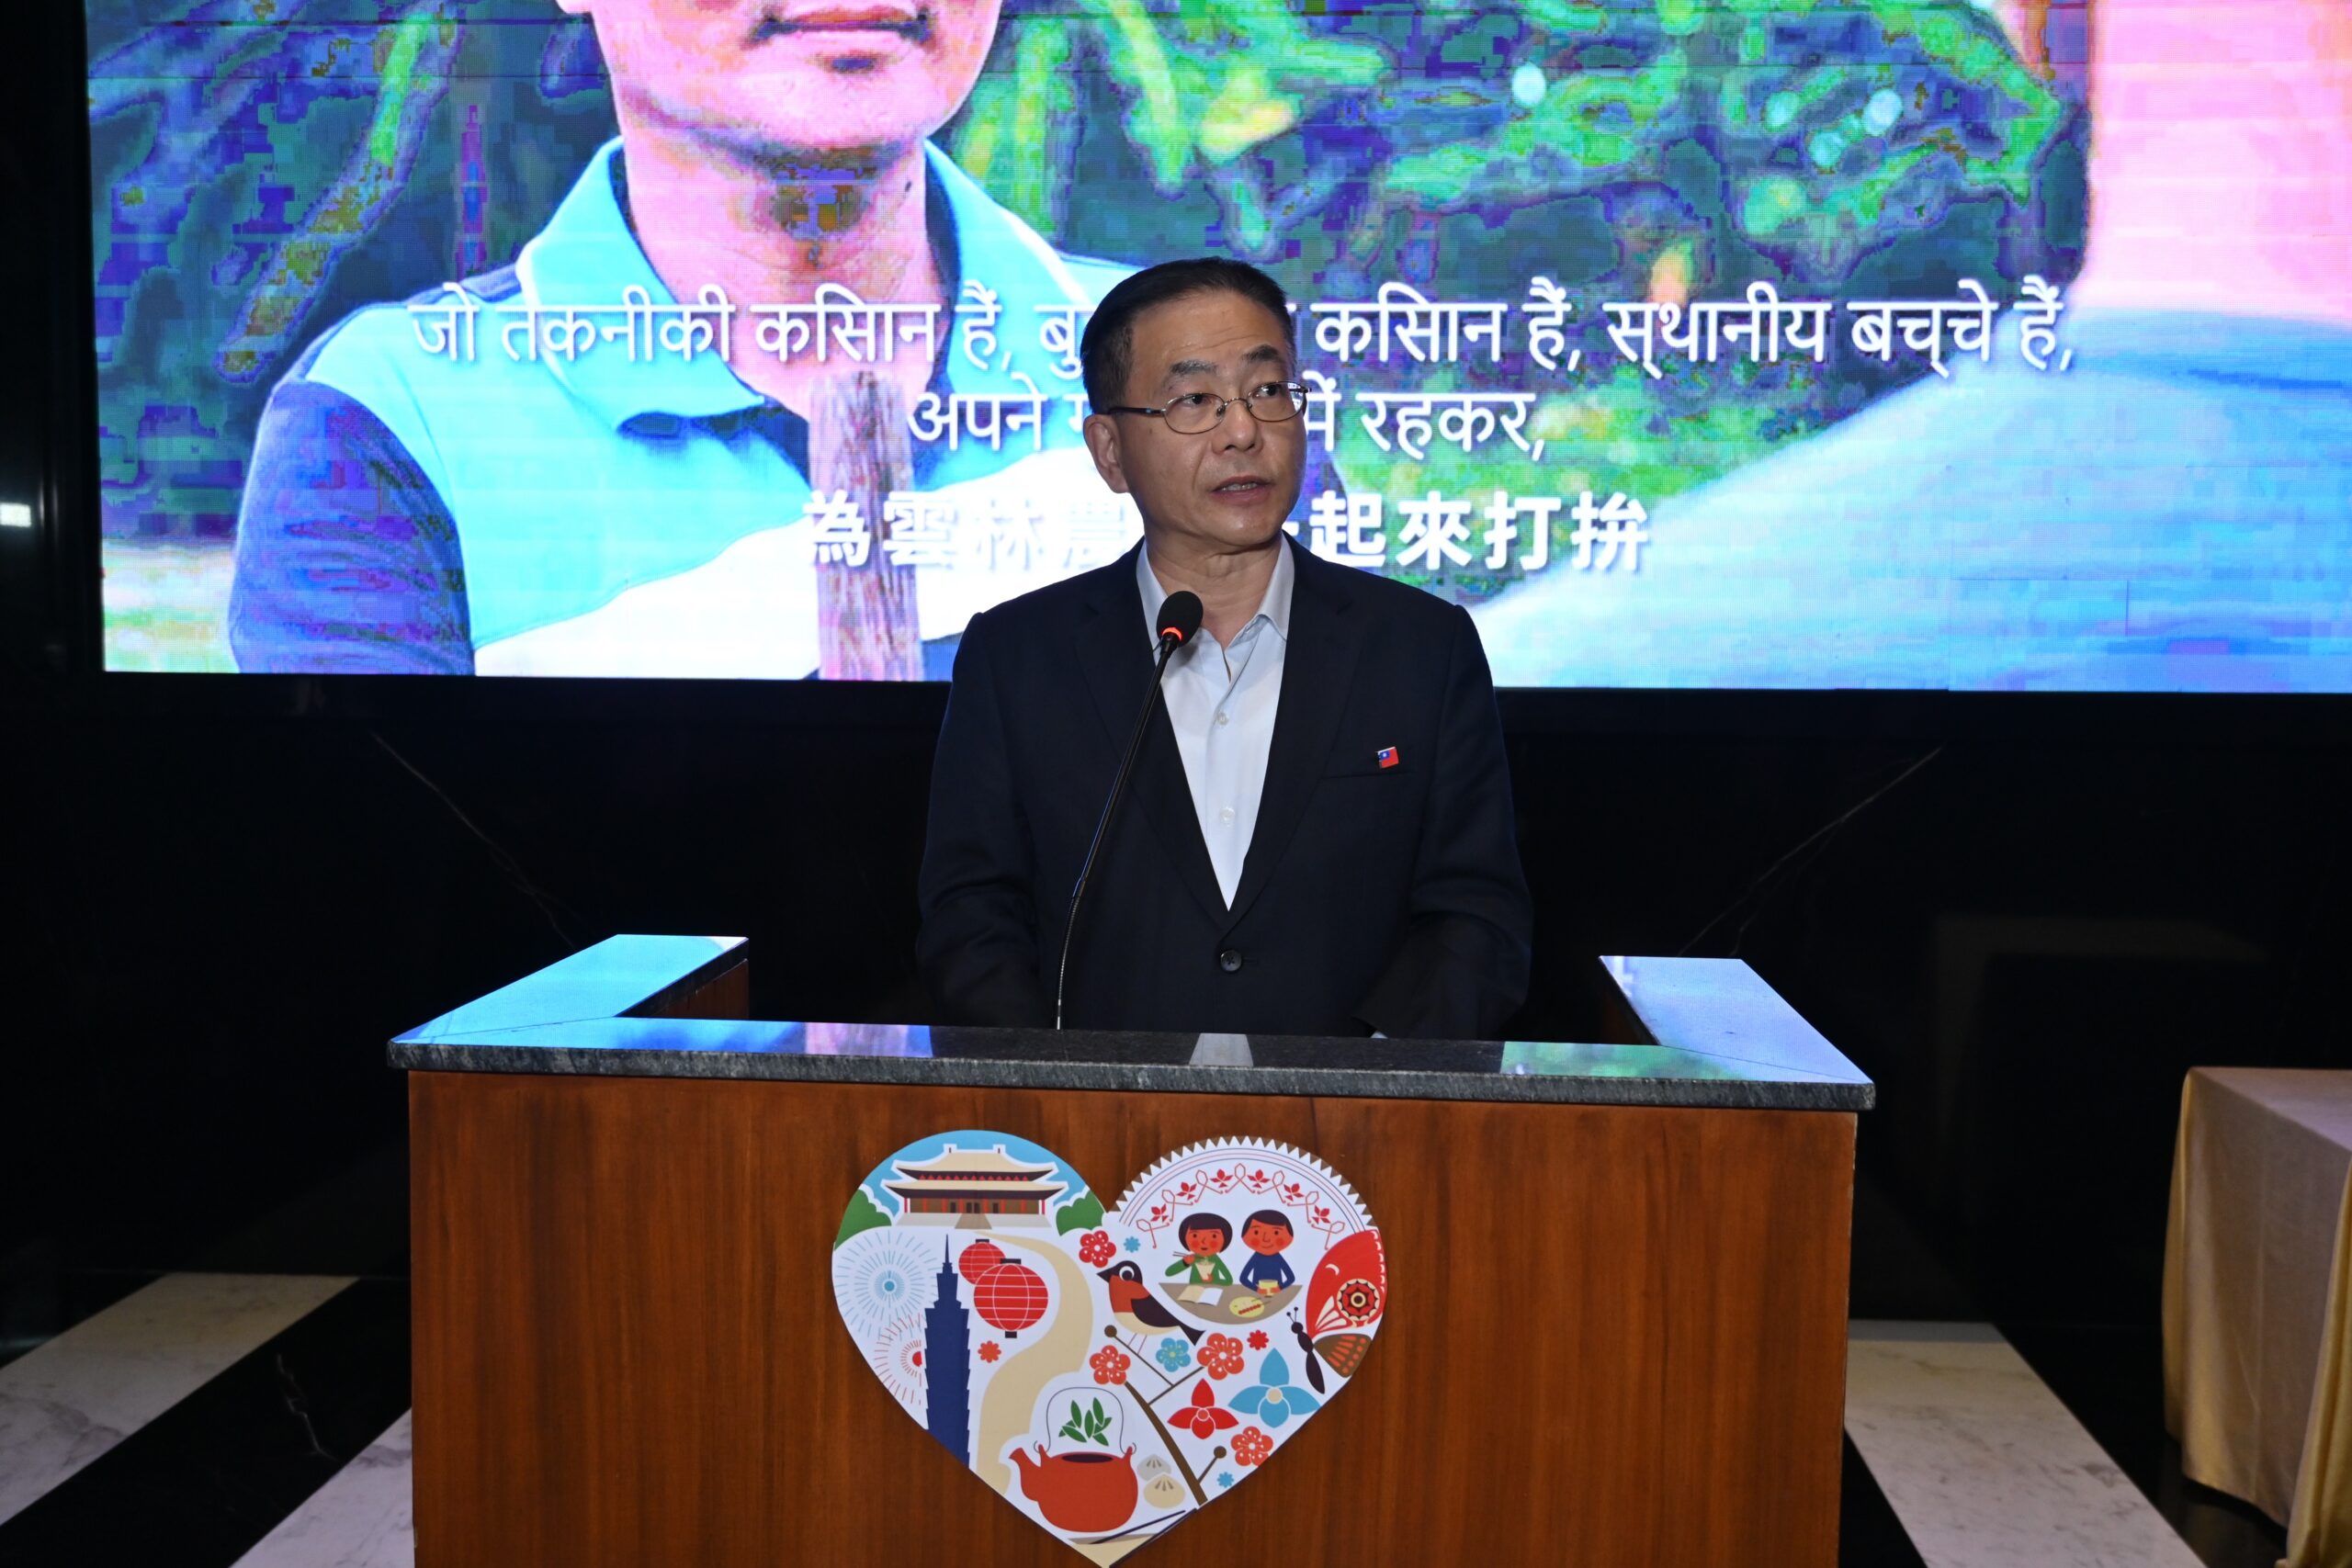 Taiwan Film Festival returns to Delhi after Covid break